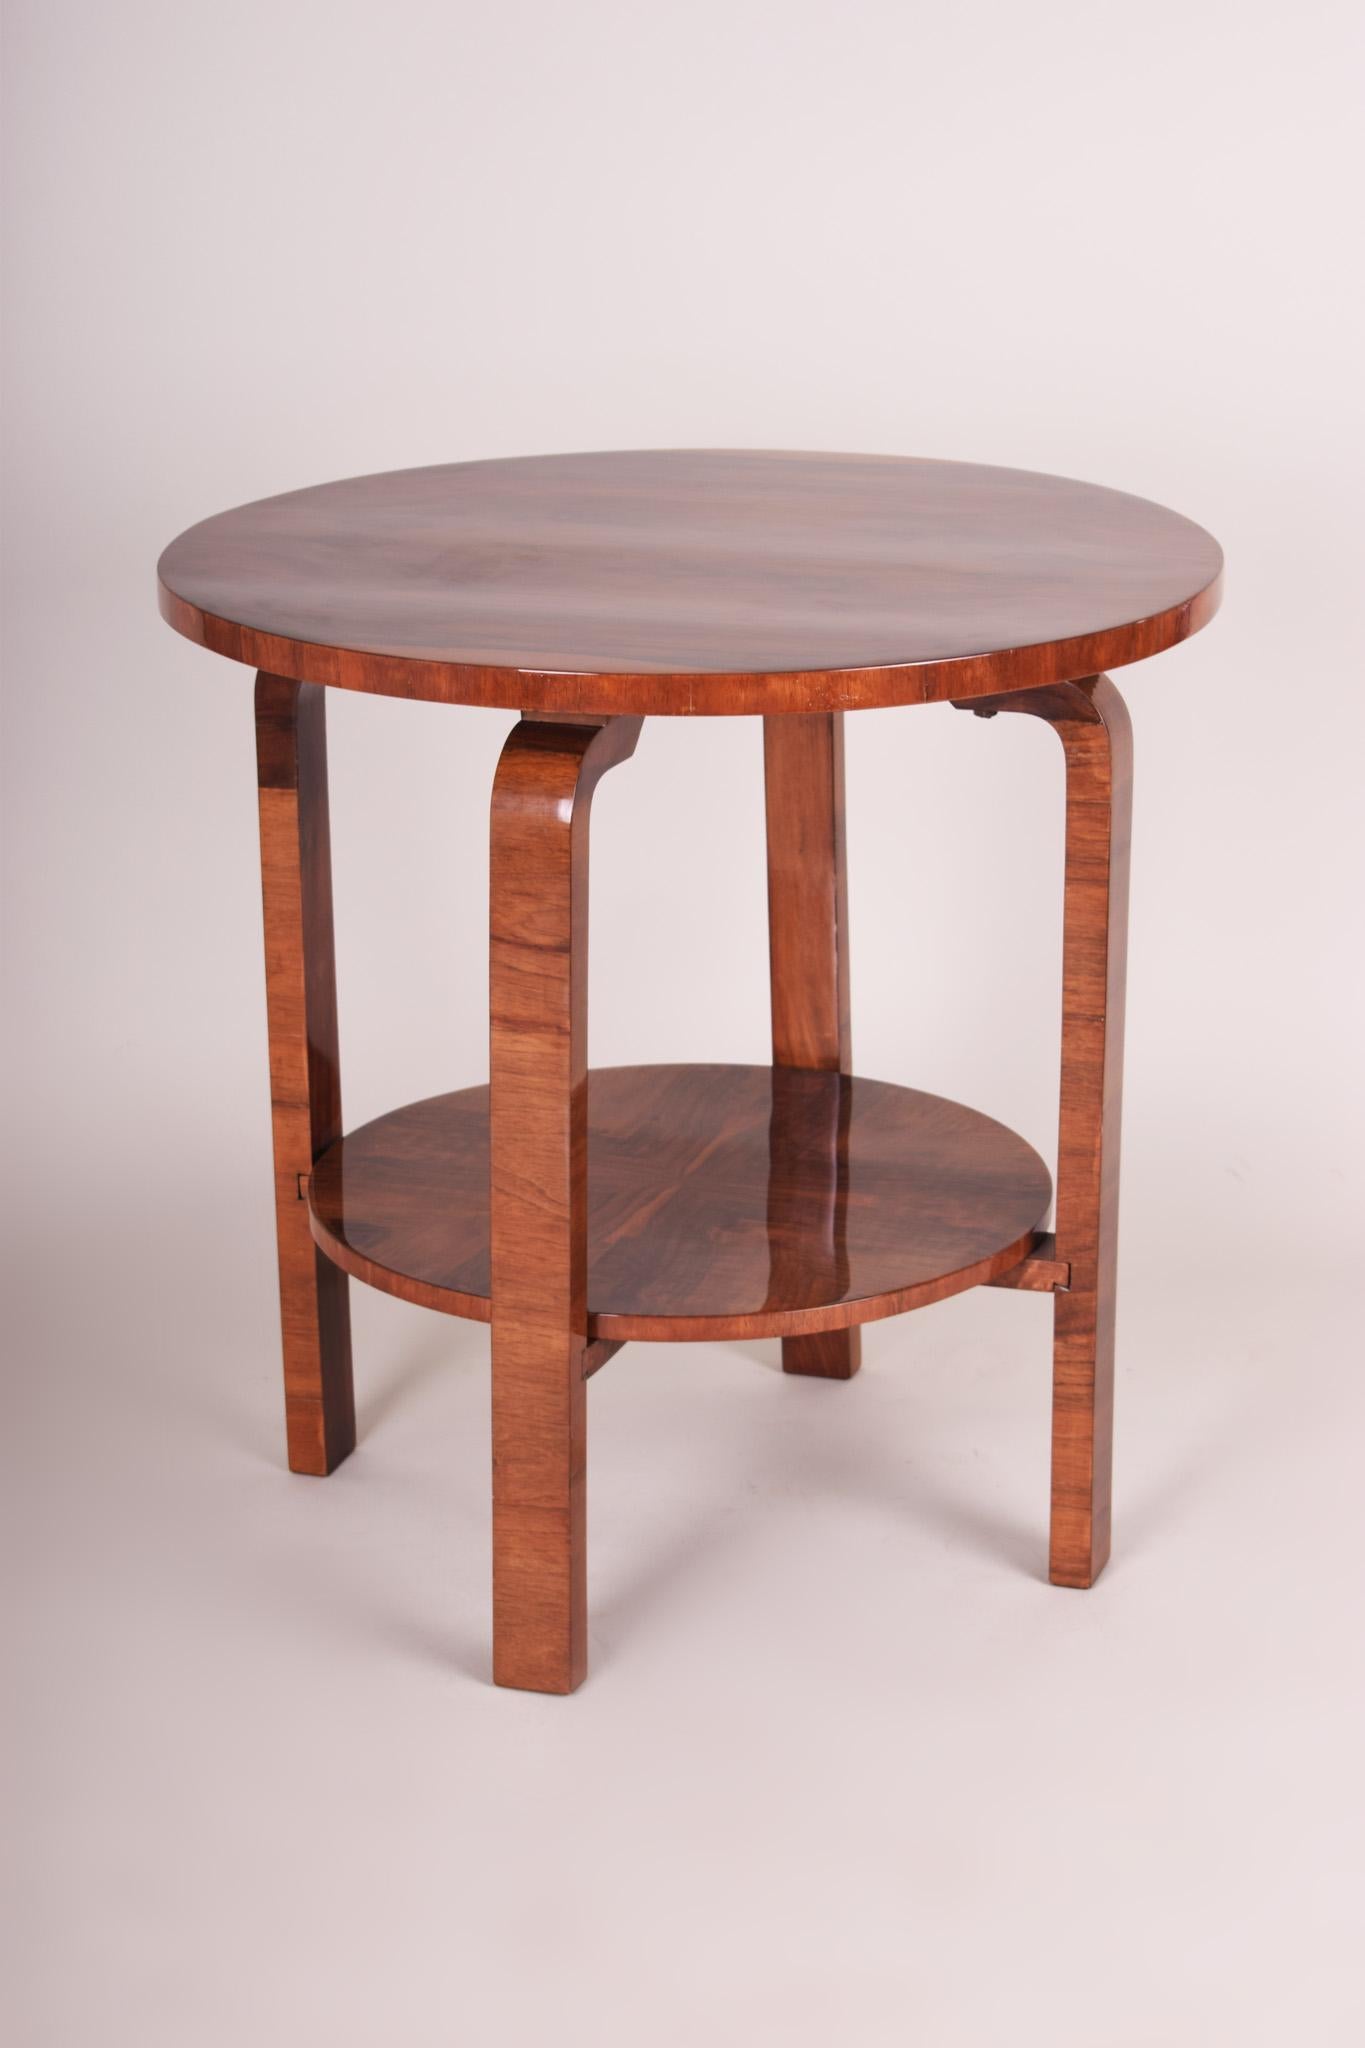 Art Deco table, Czechoslovak.
Completely restored. 
Material: Walnut.